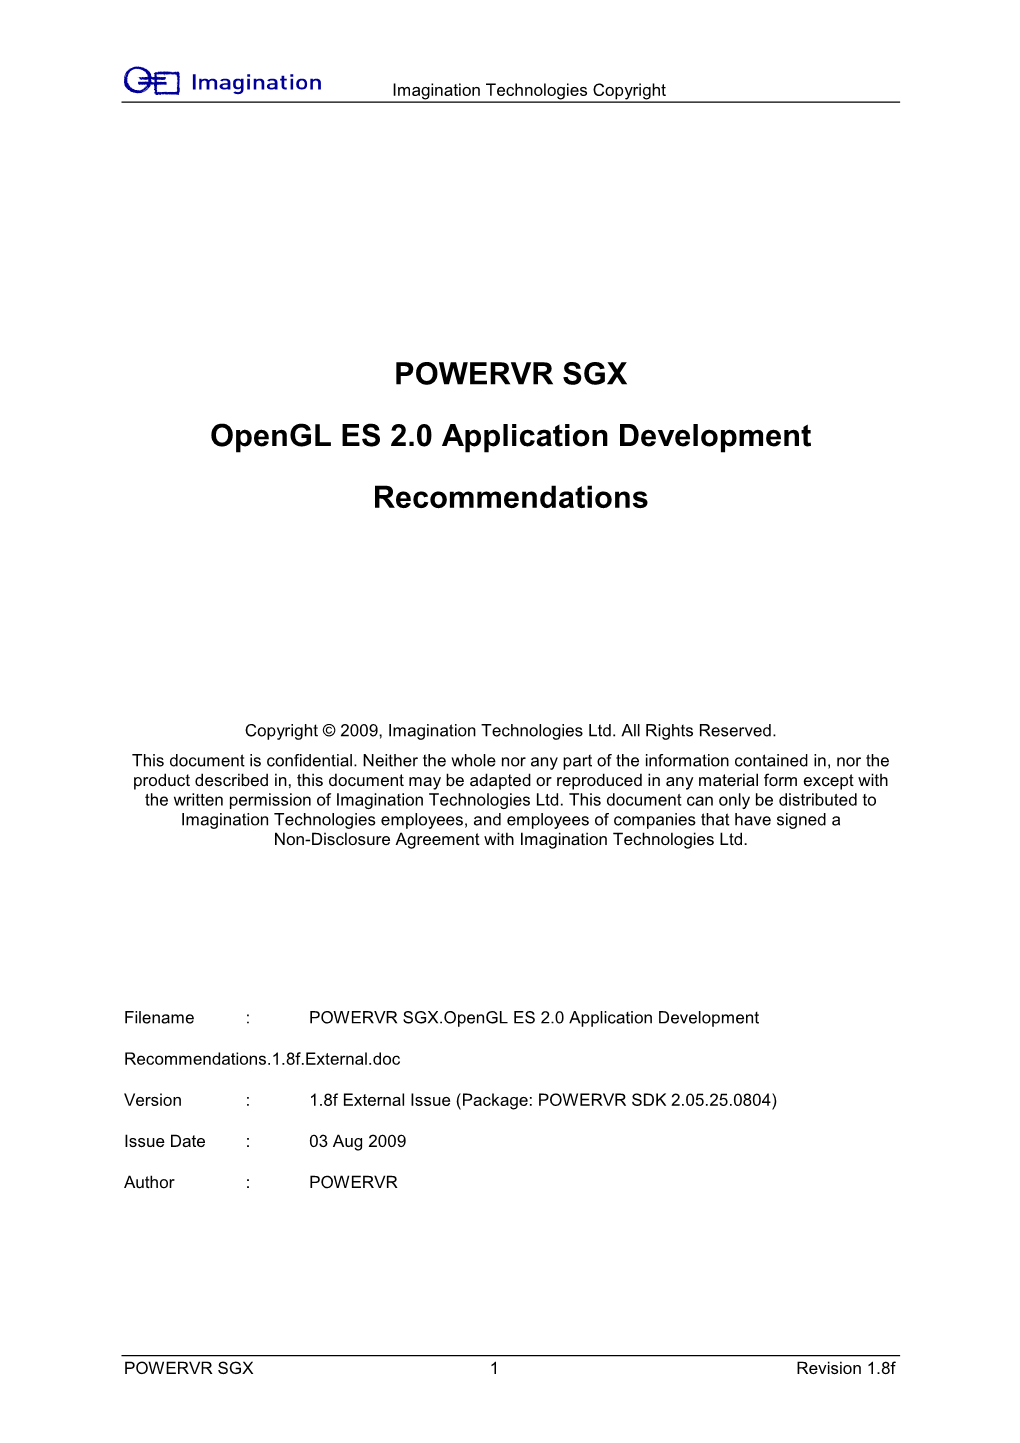 POWERVR SGX Opengl ES 2.0 Application Development